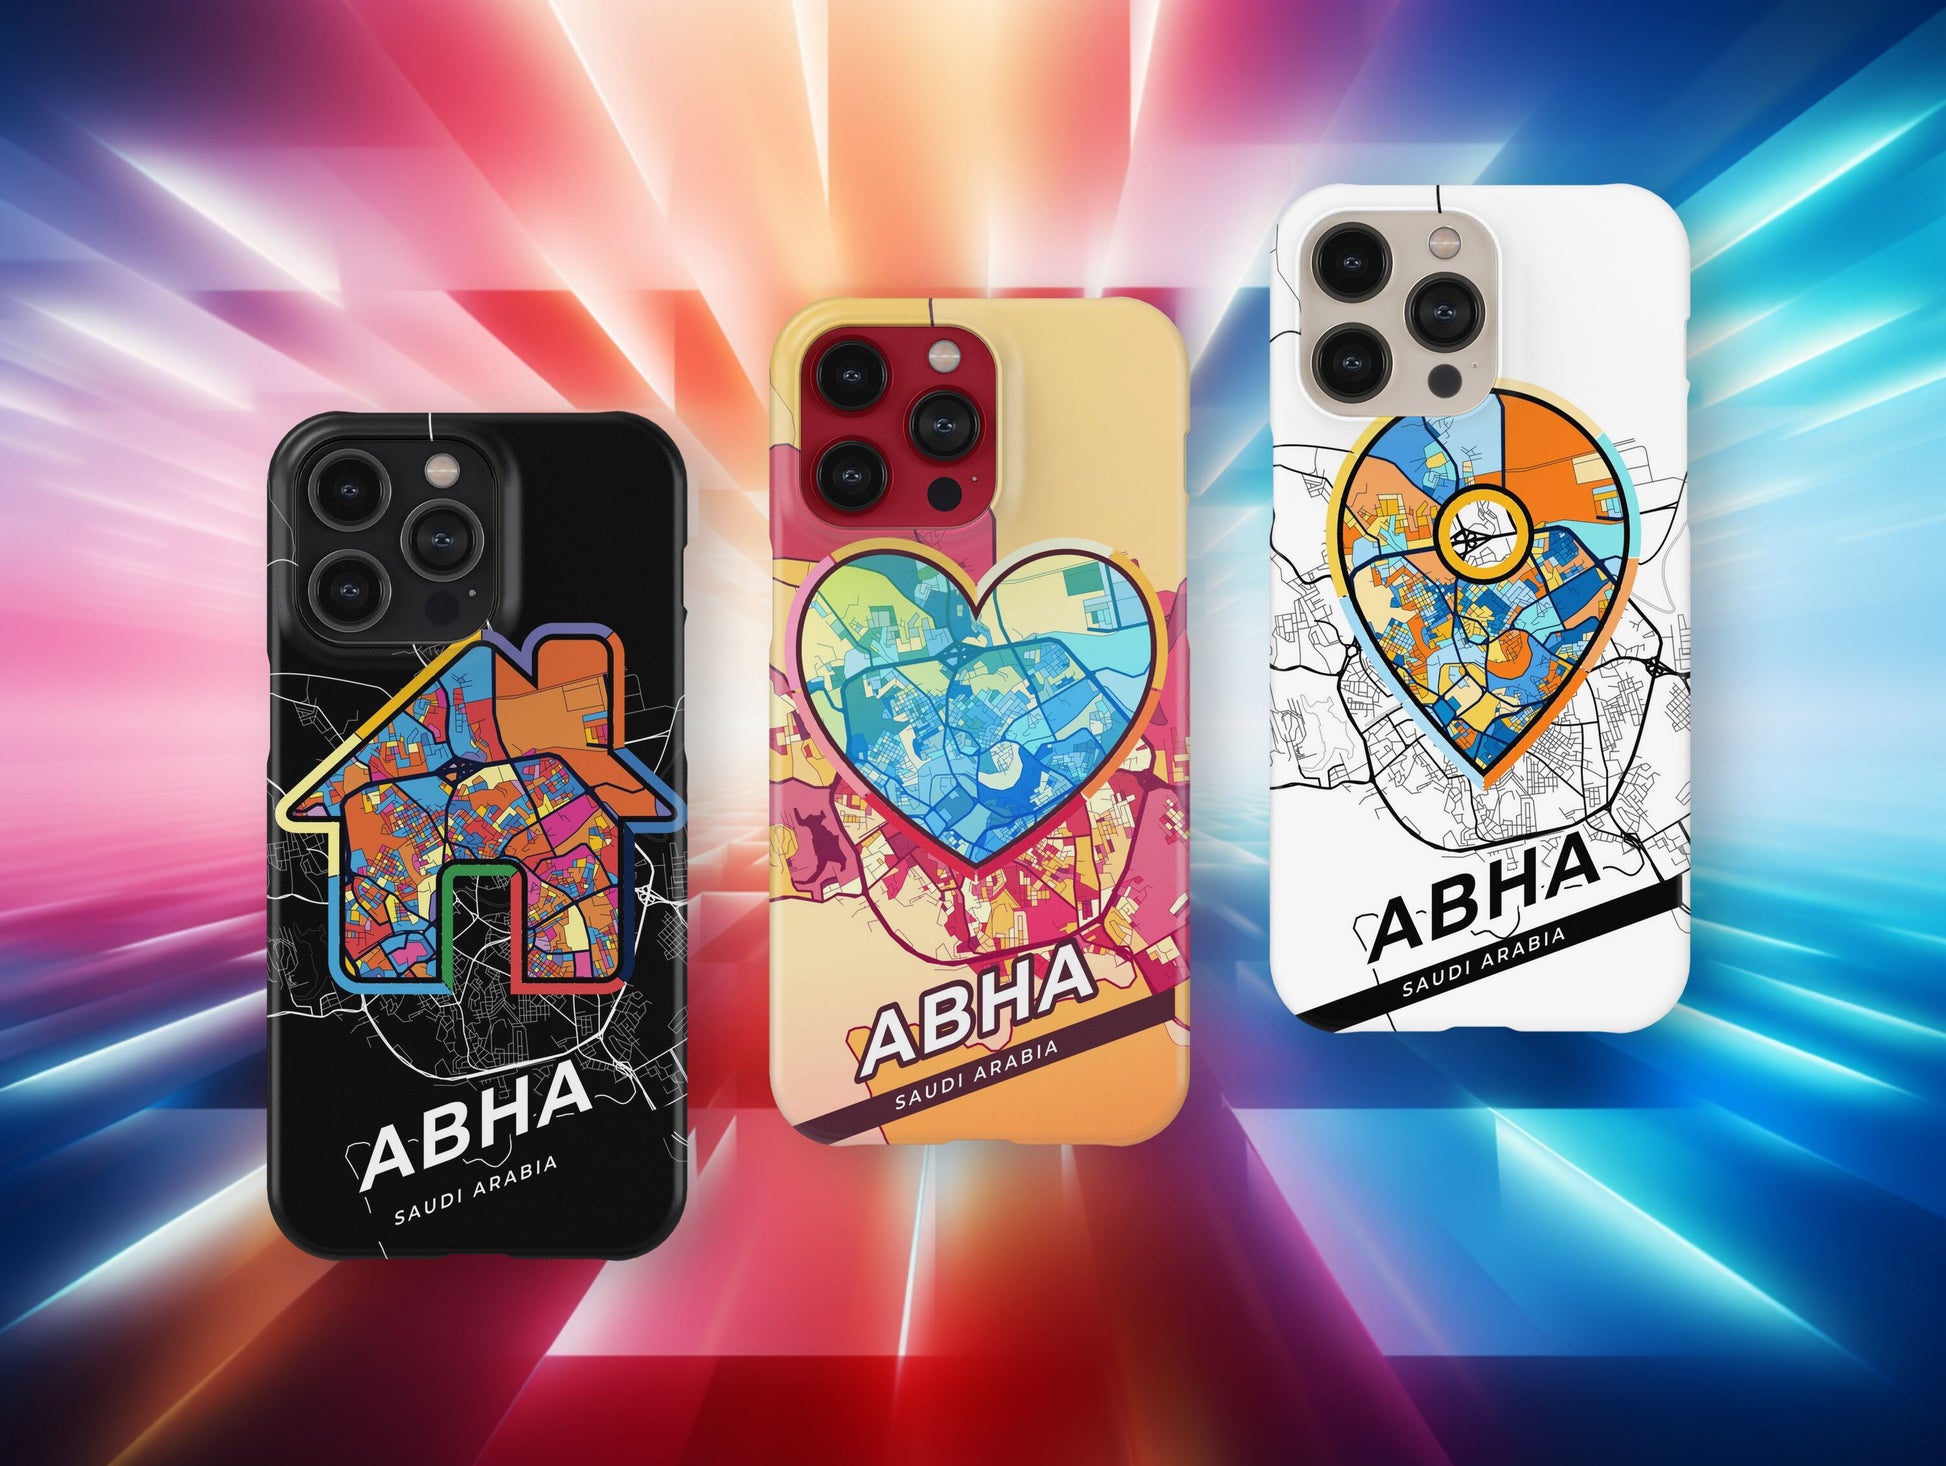 Abha Saudi Arabia slim phone case with colorful icon. Birthday, wedding or housewarming gift. Couple match cases.